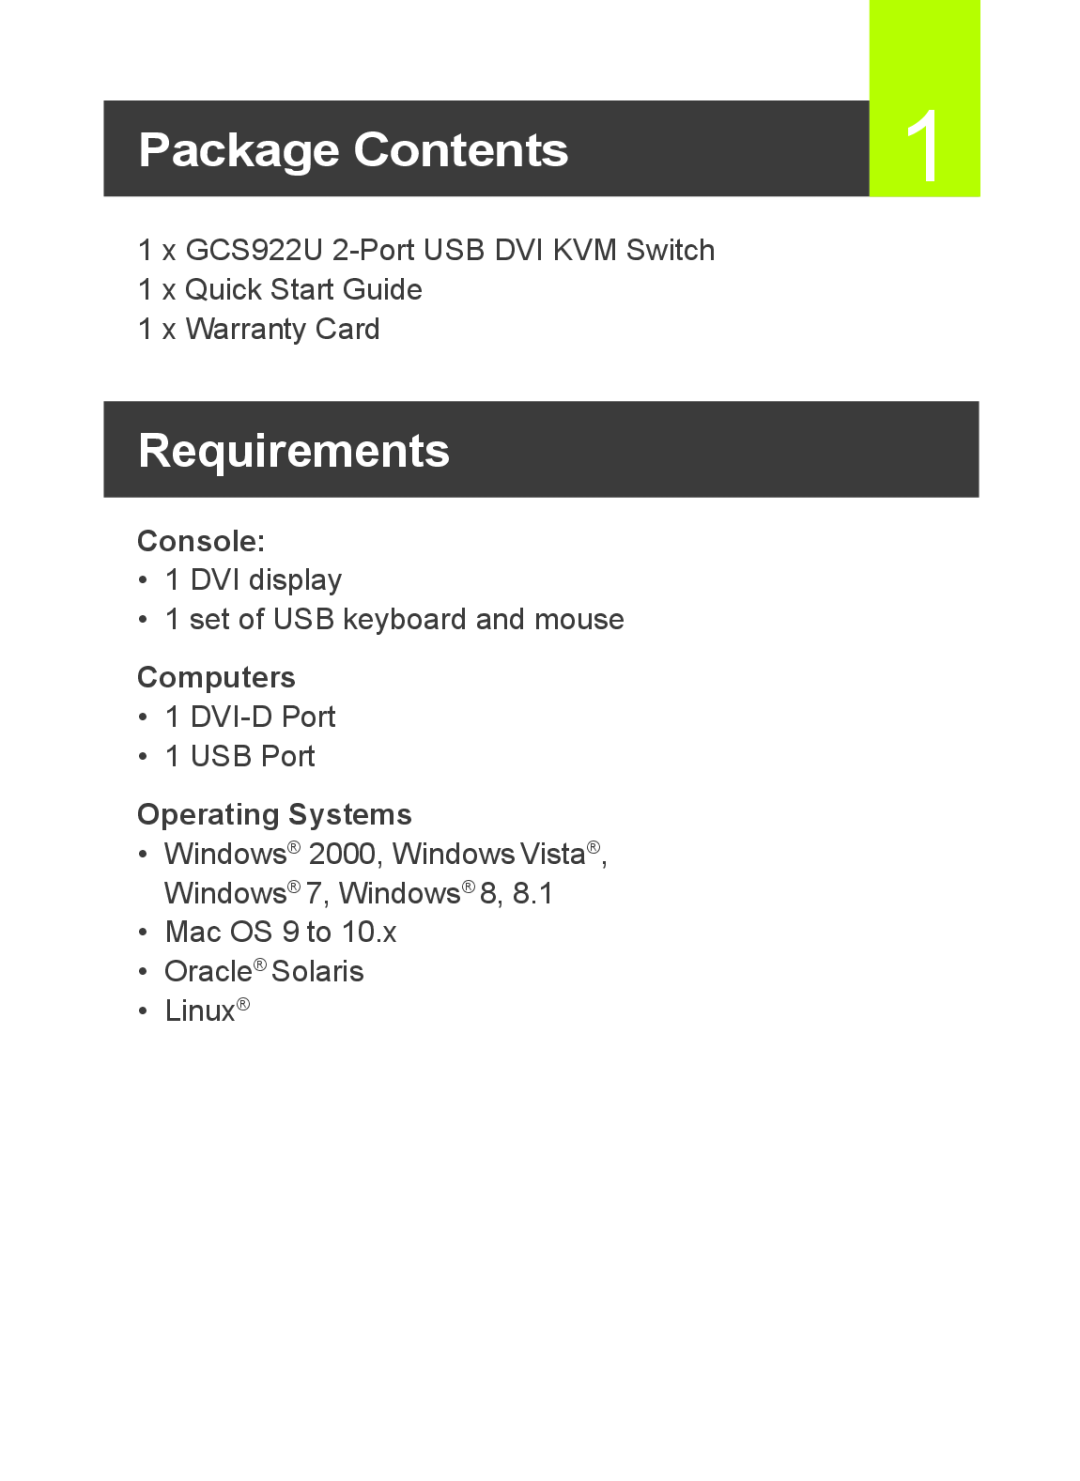 IOGear Package Contents, Requirements, x GCS922U 2-Port USB DVI KVM Switch 1 x Quick Start Guide, x Warranty Card 